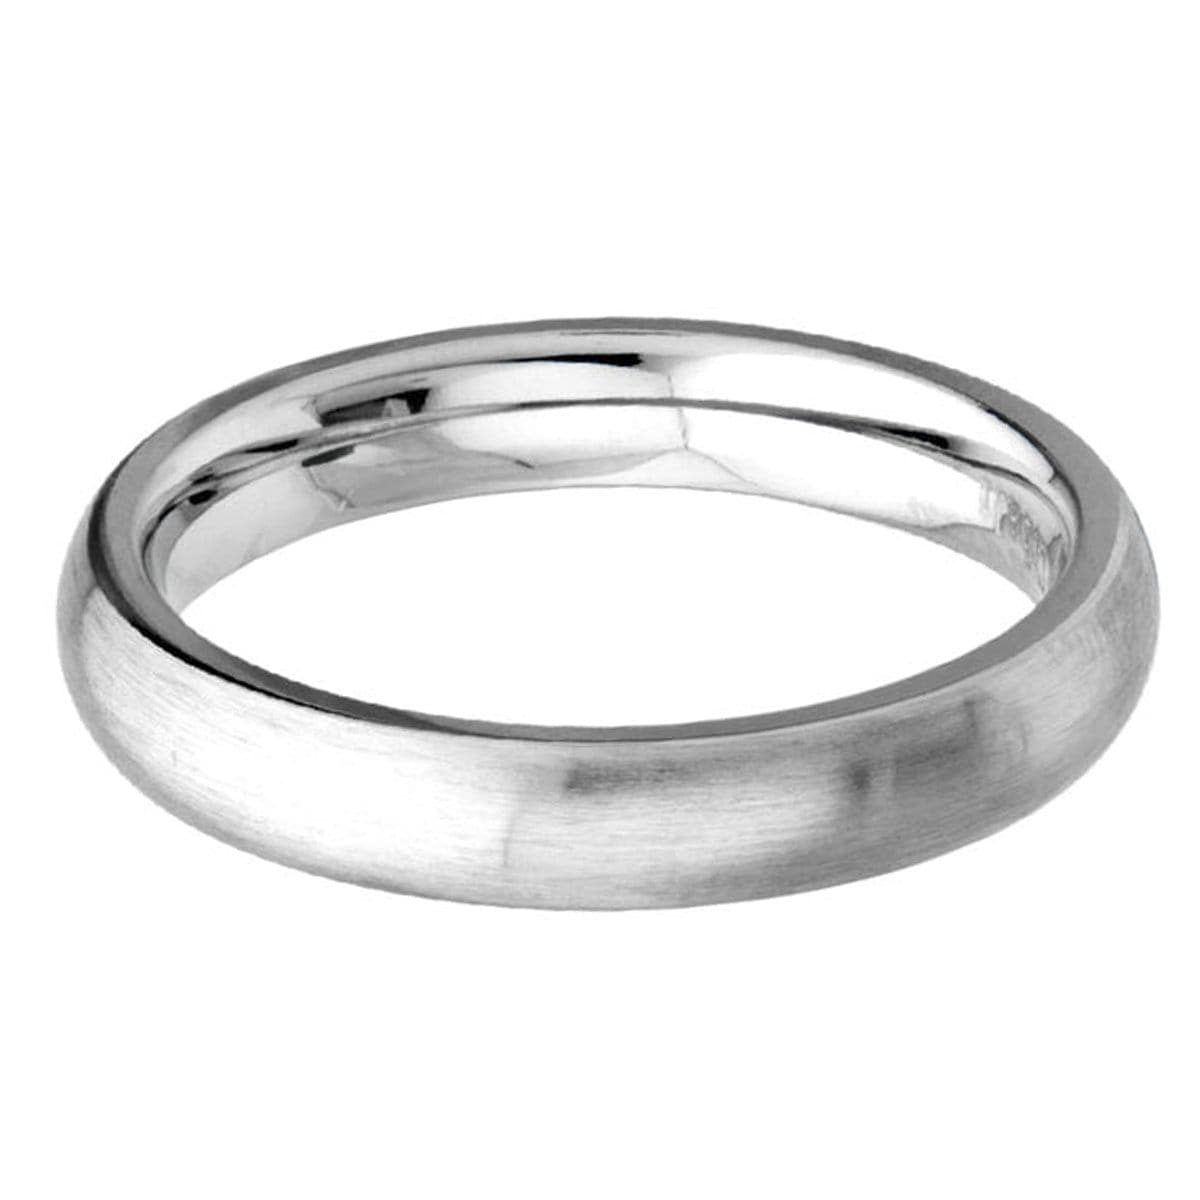 INOX JEWELRY Rings Silver Tone Cobalt Chrome Matte Finish 4mm Wedding Band FRC066-9